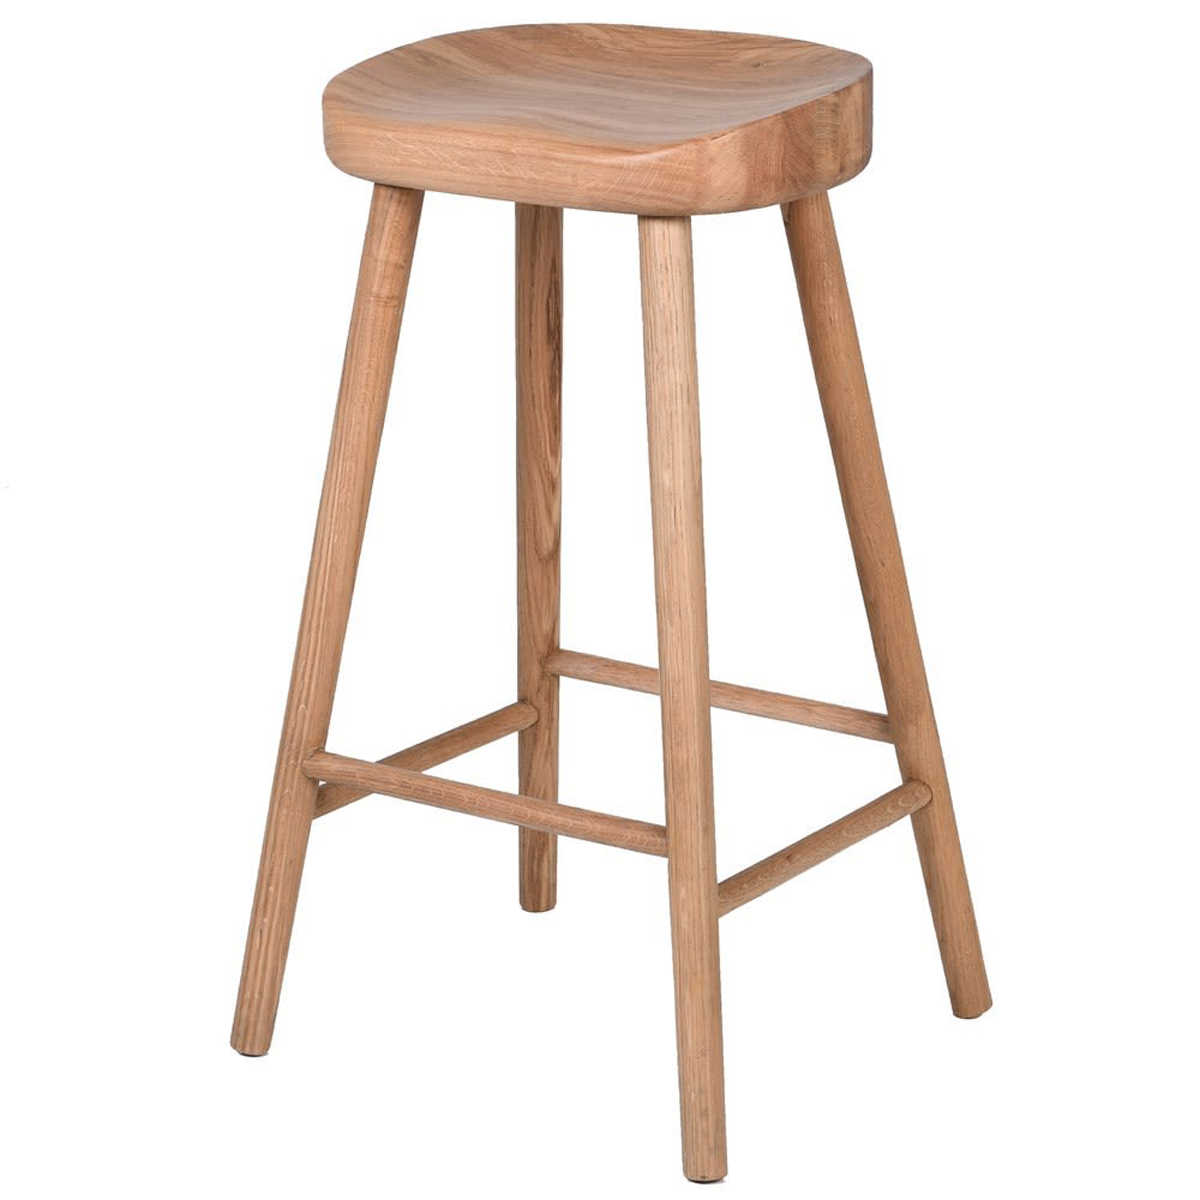 low weathered oak wooden bar stool